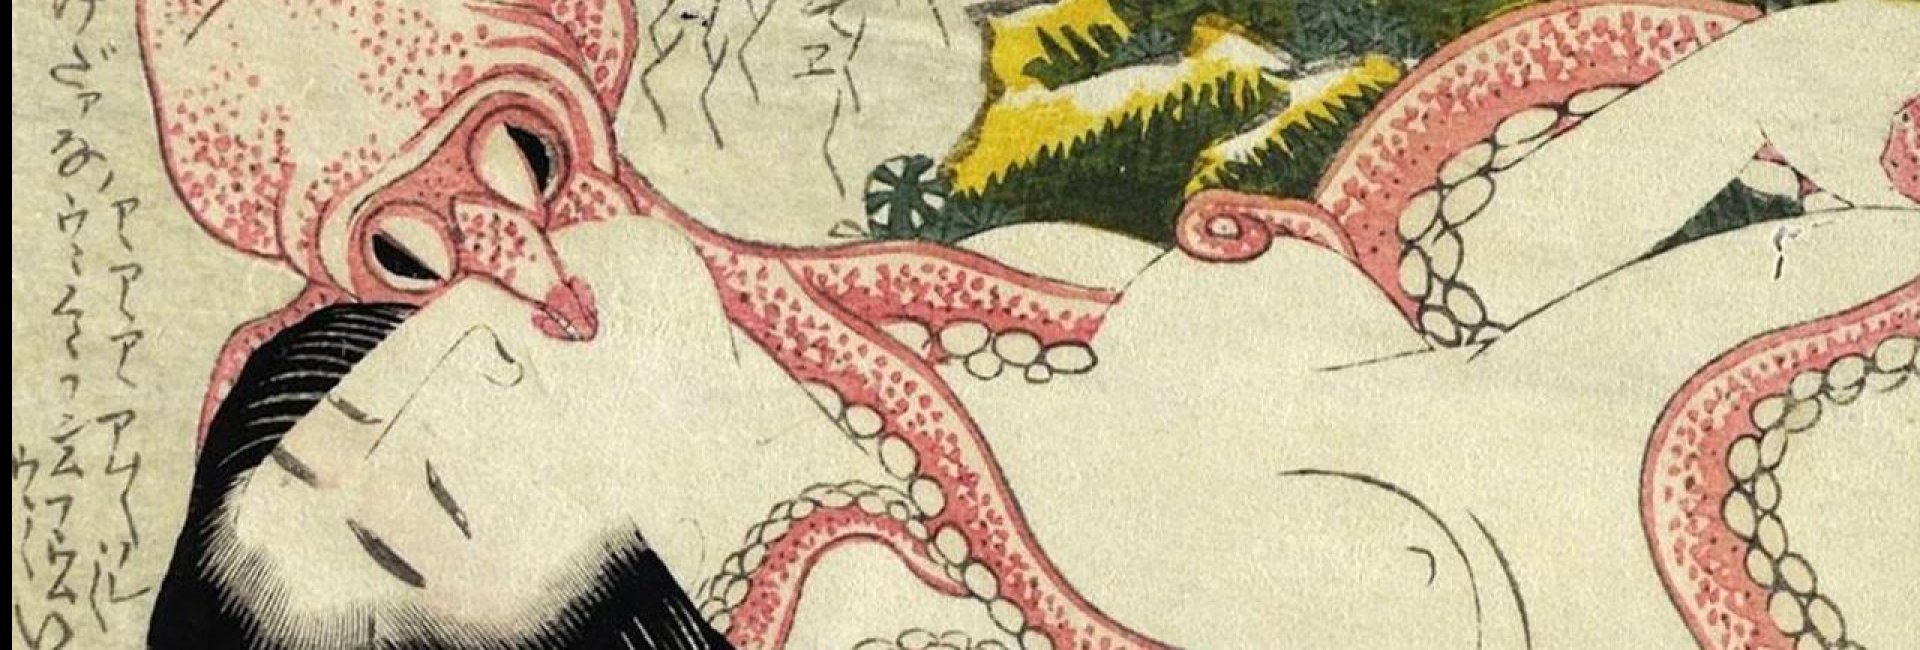 Katsushika Hokusai - diving girl